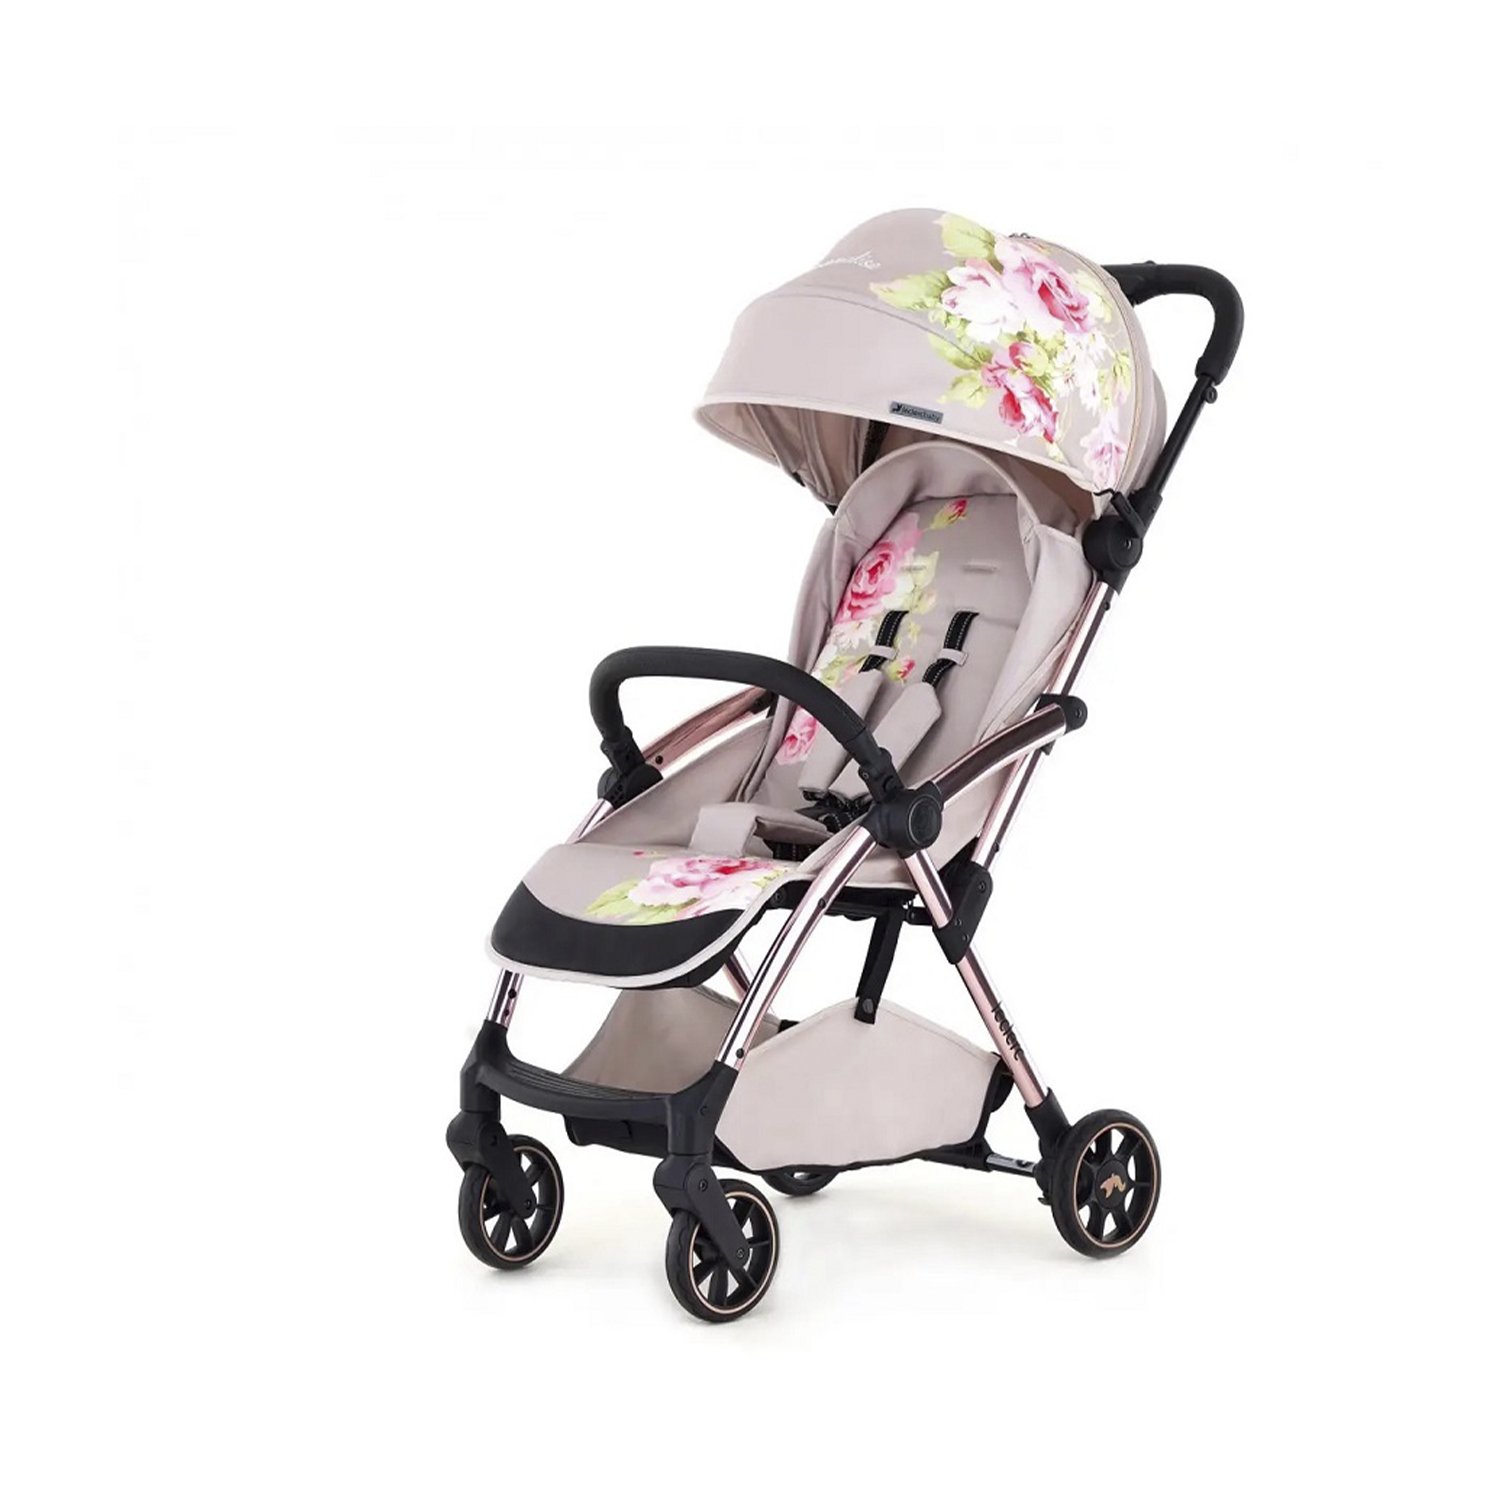 Коляска прогулочная Leclerc Baby+сумка прогулочная коляска monnalisa birch сумка для коляски leclerc baby